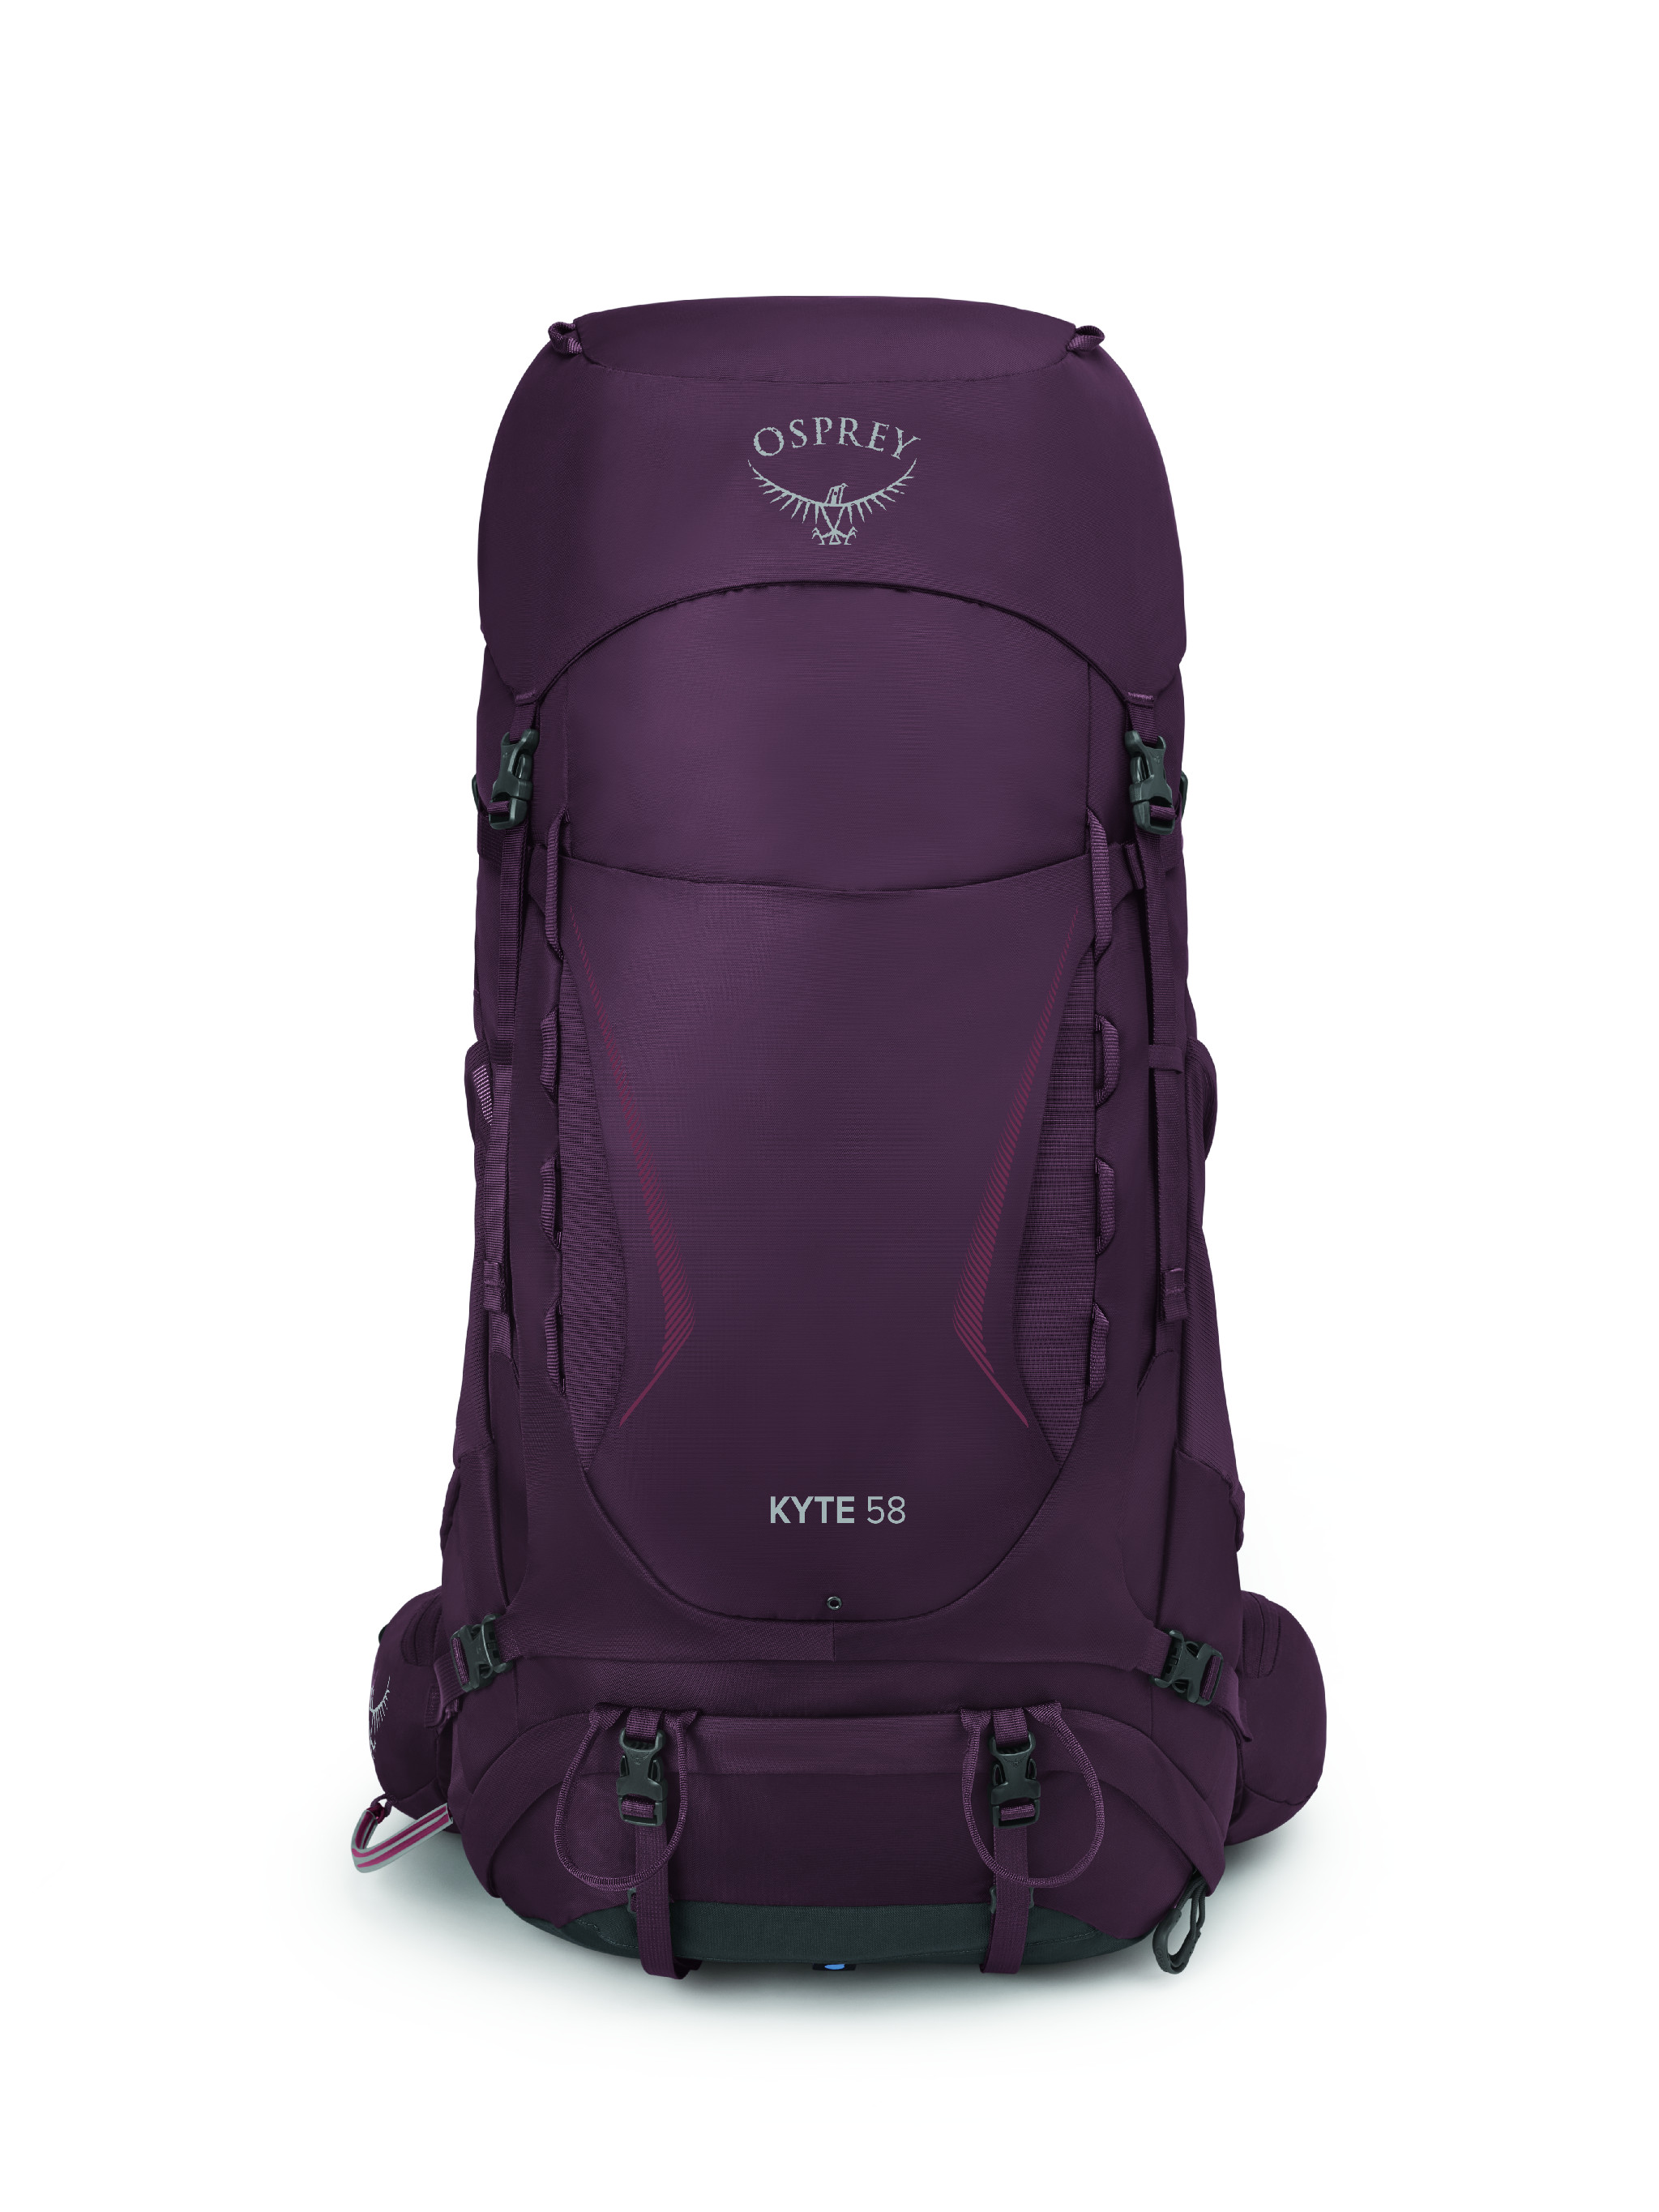 OSPREY KYTE 58 Barva: elderberry purple, Velikost: WM/WL